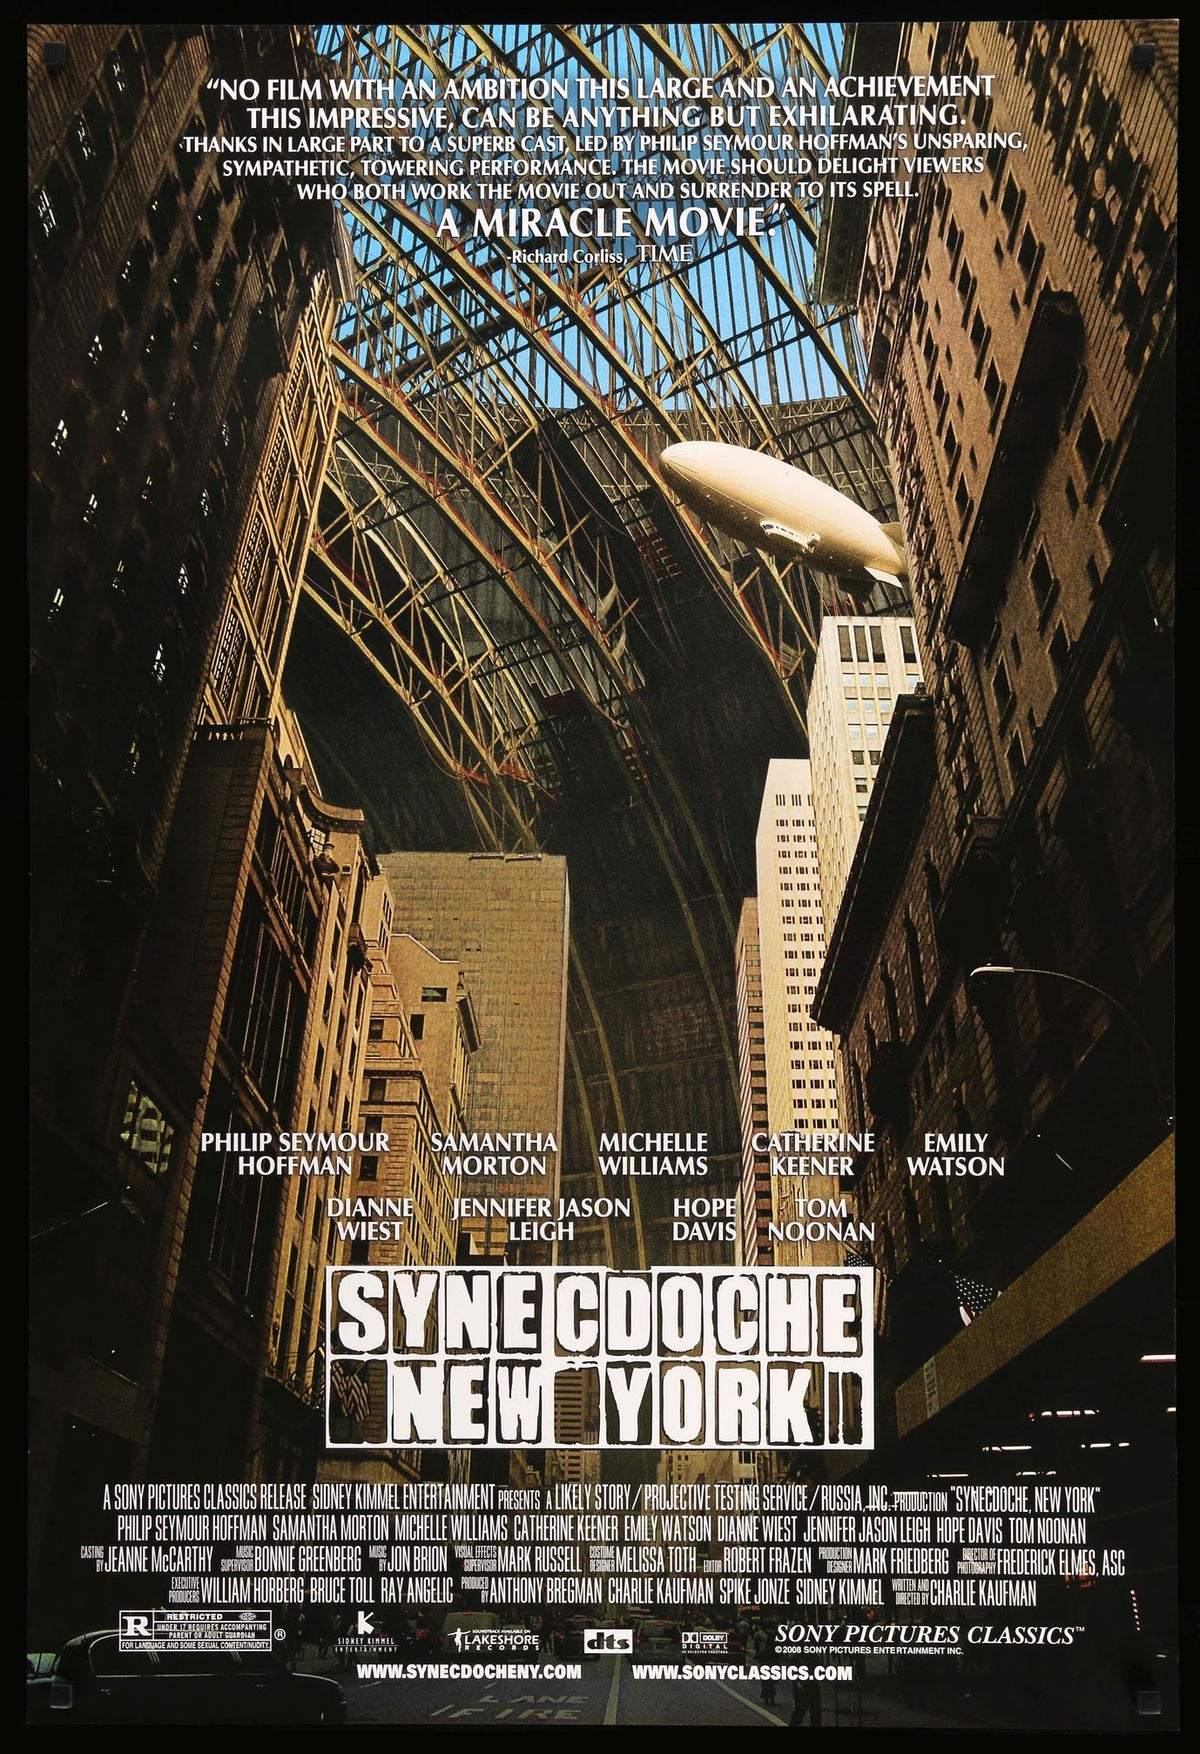 Synecdoche, New York (2008) original movie poster for sale at Original Film Art